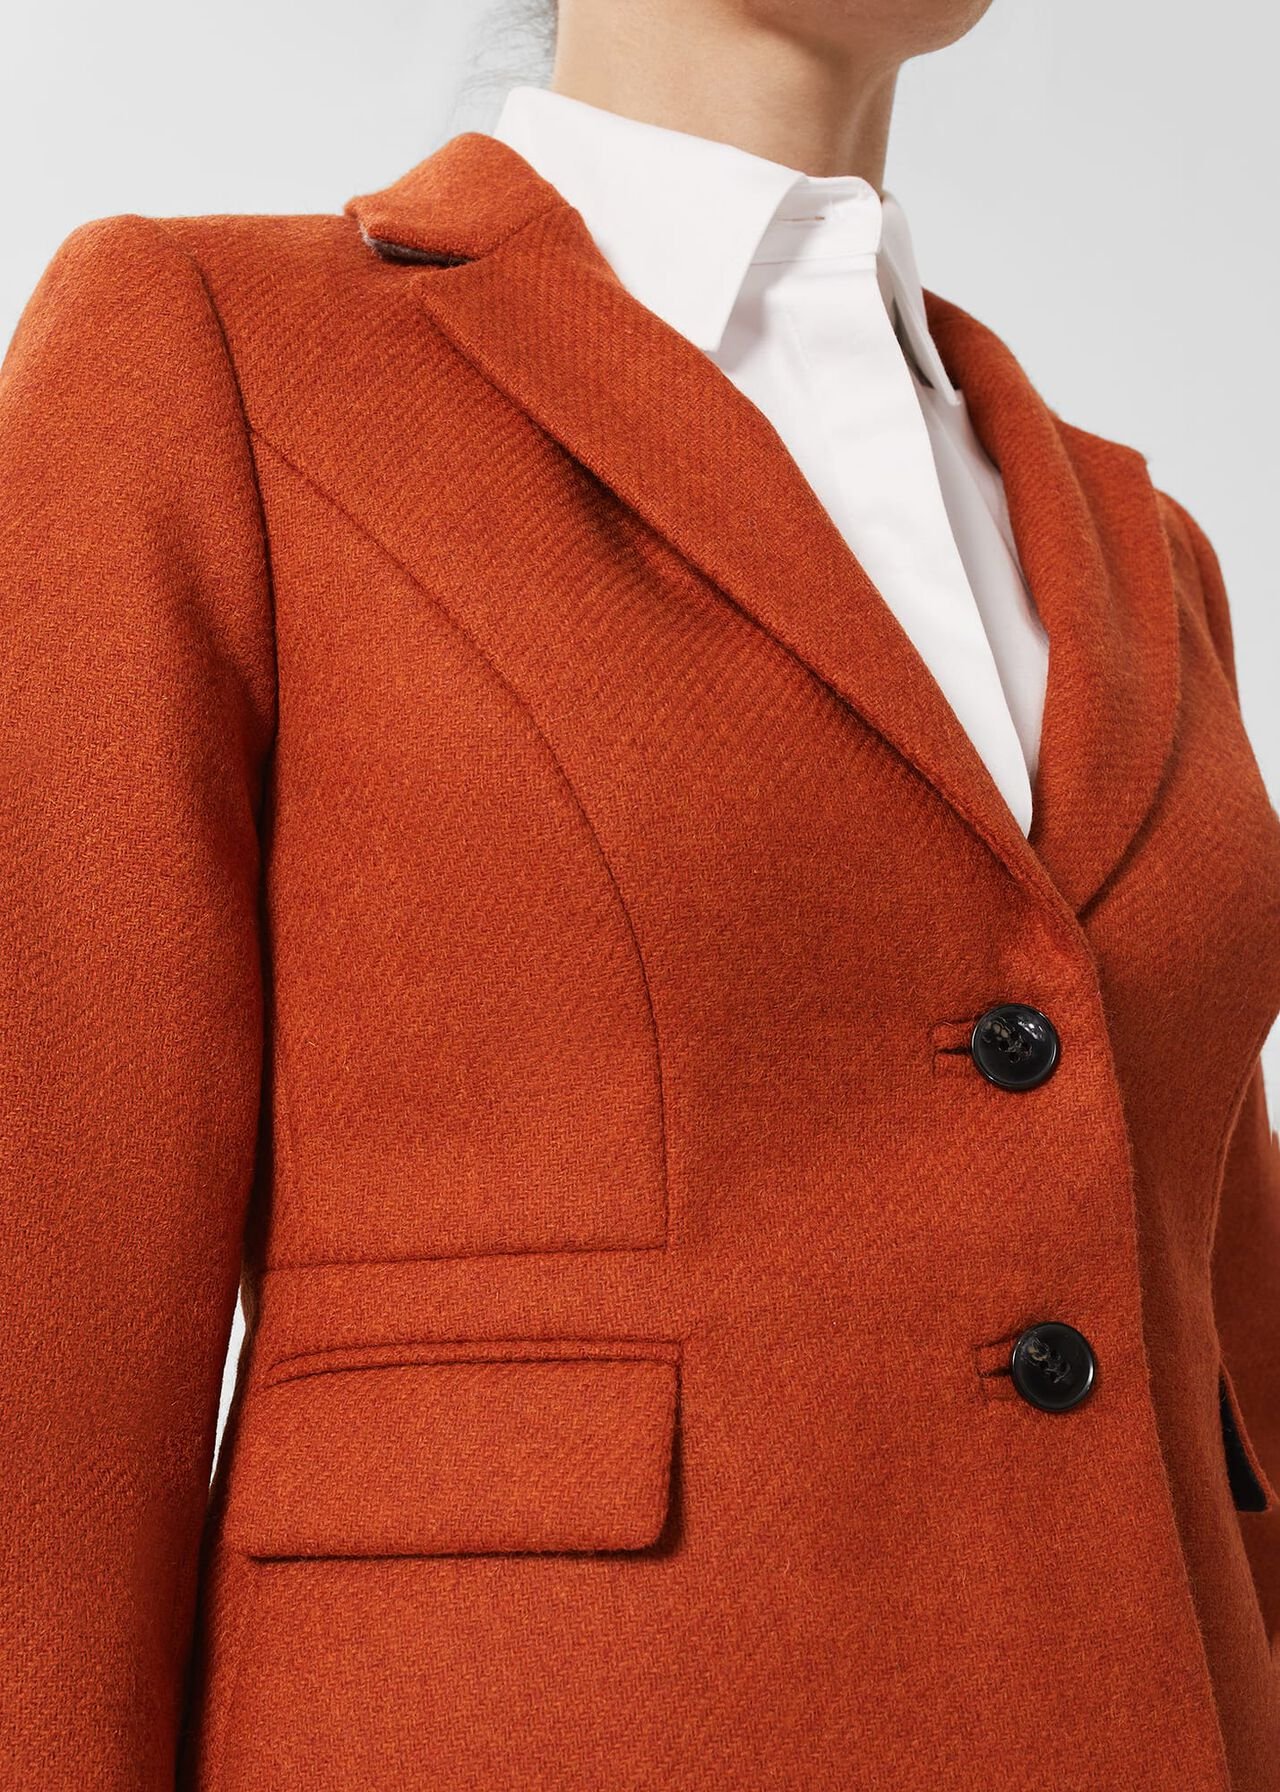 Petite Hackness Wool Jacket, Orange, hi-res